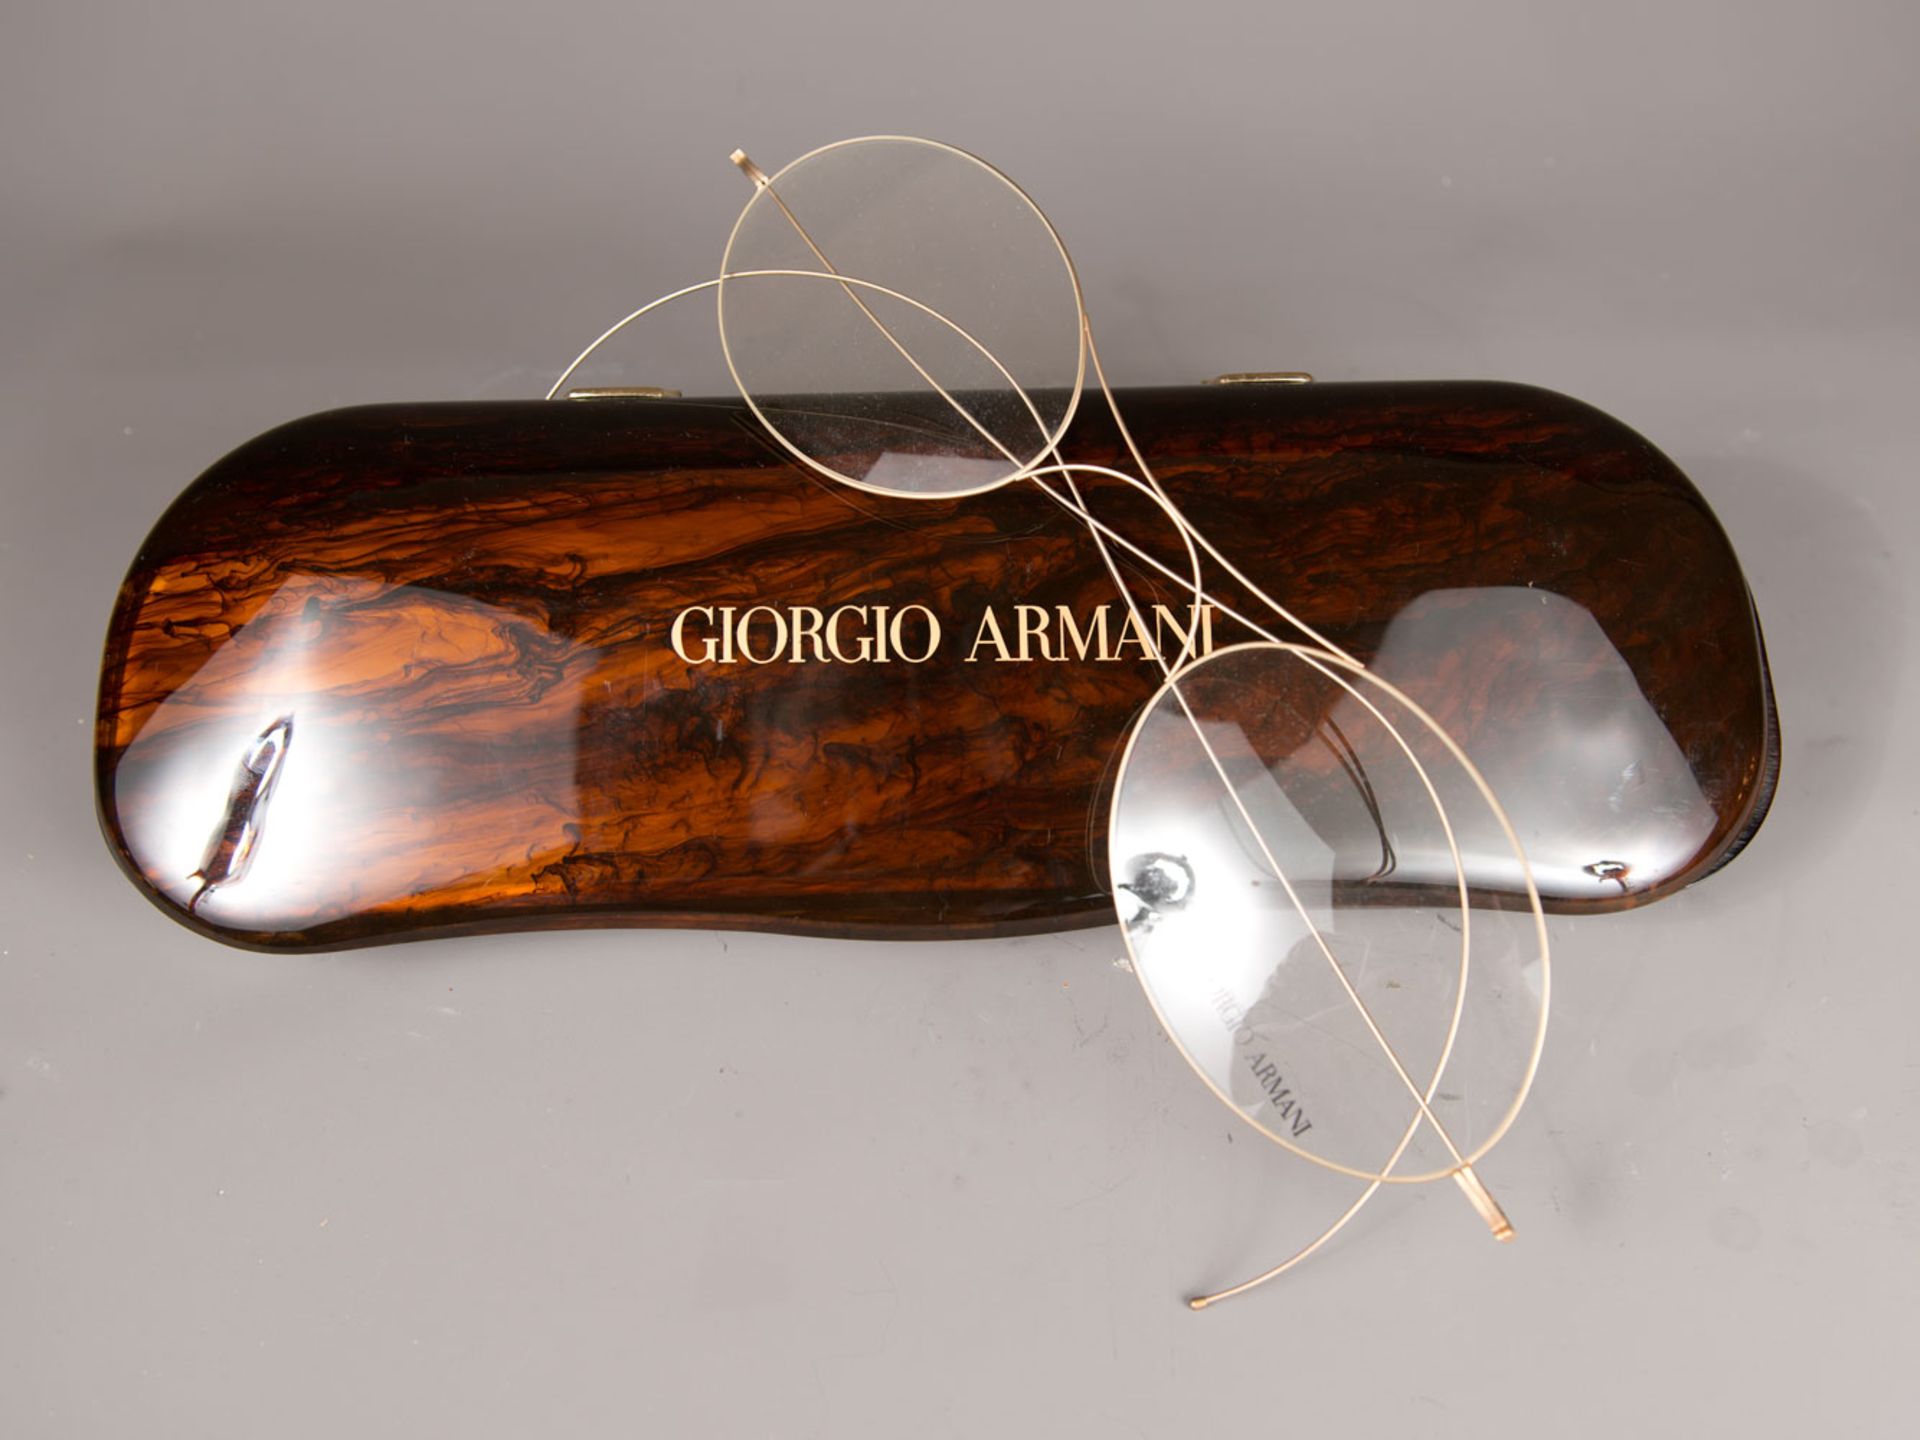 Giorgio Armani show case glasses etui